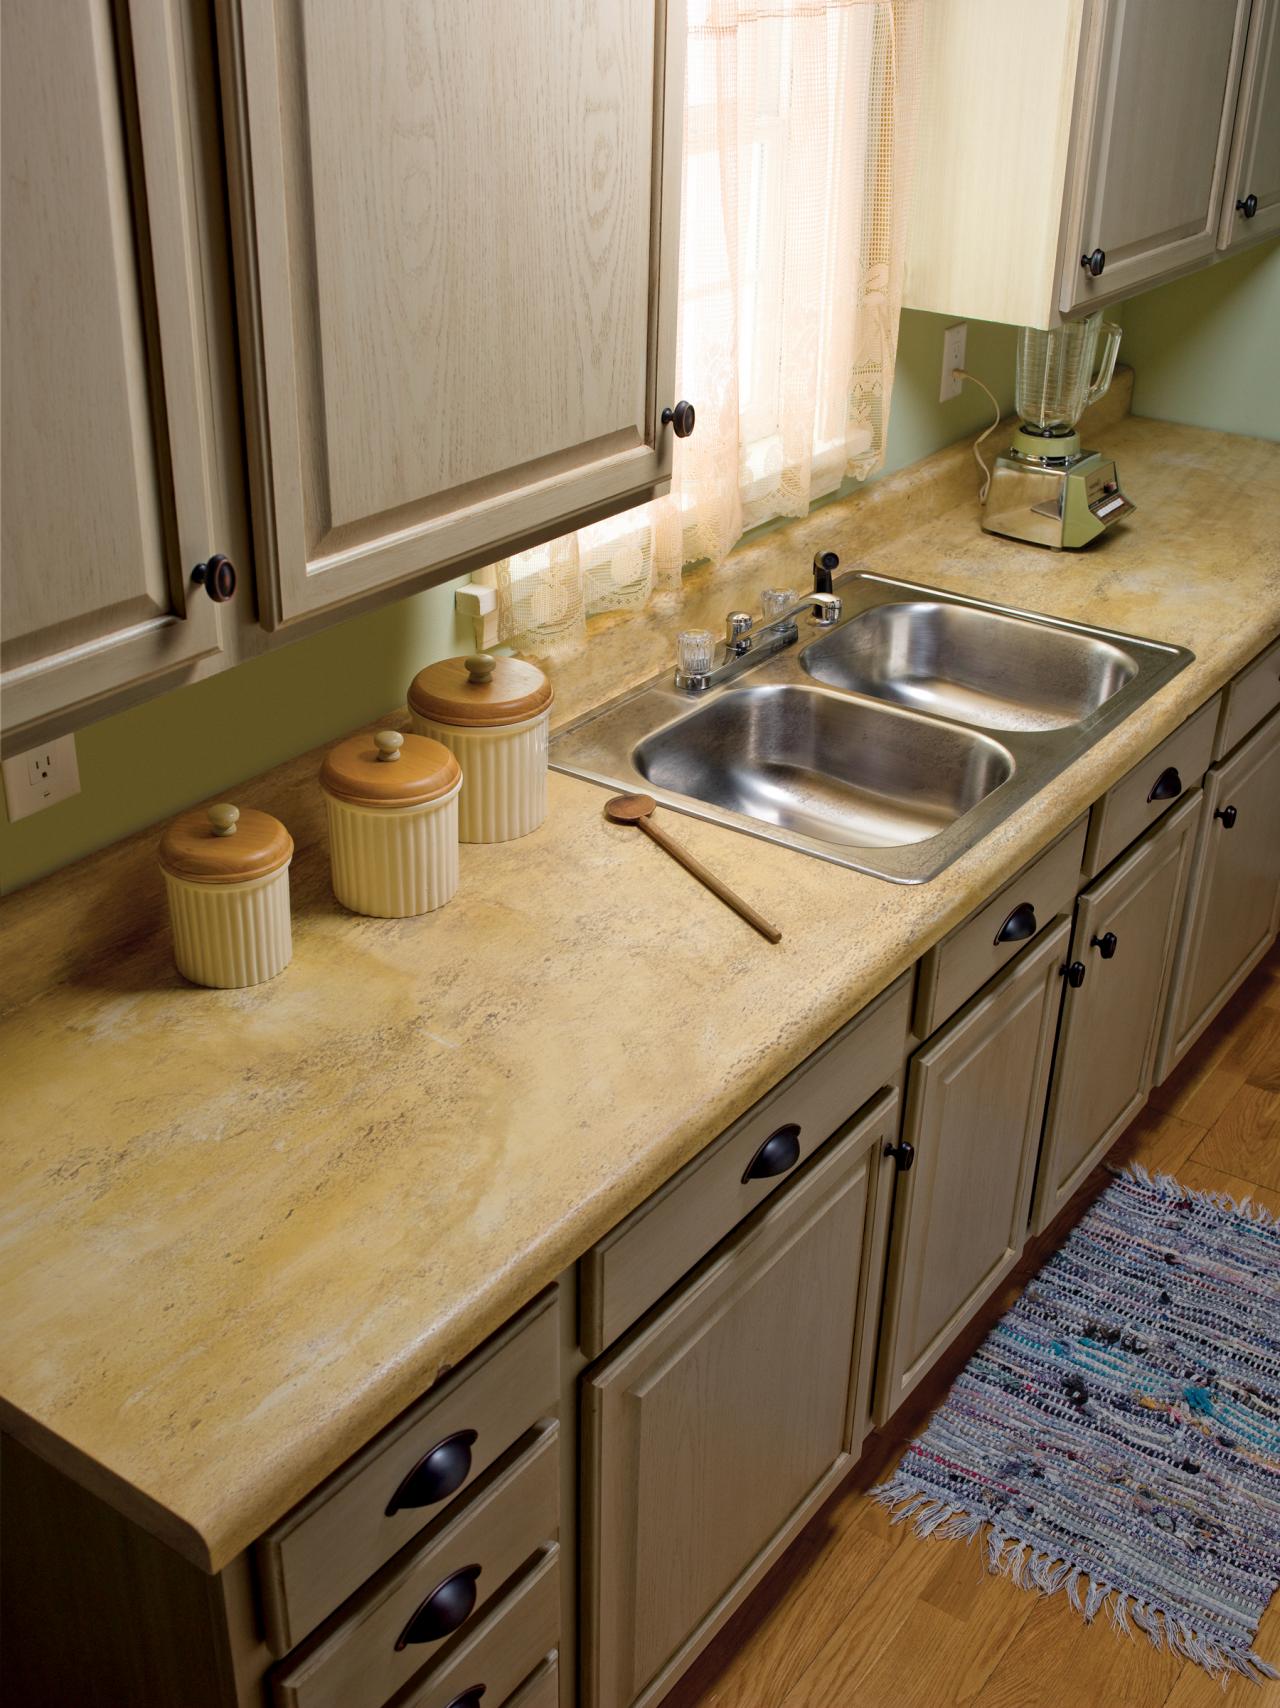 Resurface Laminate Countertops, How To Paint Laminate Kitchen Countertops Look Like Granite